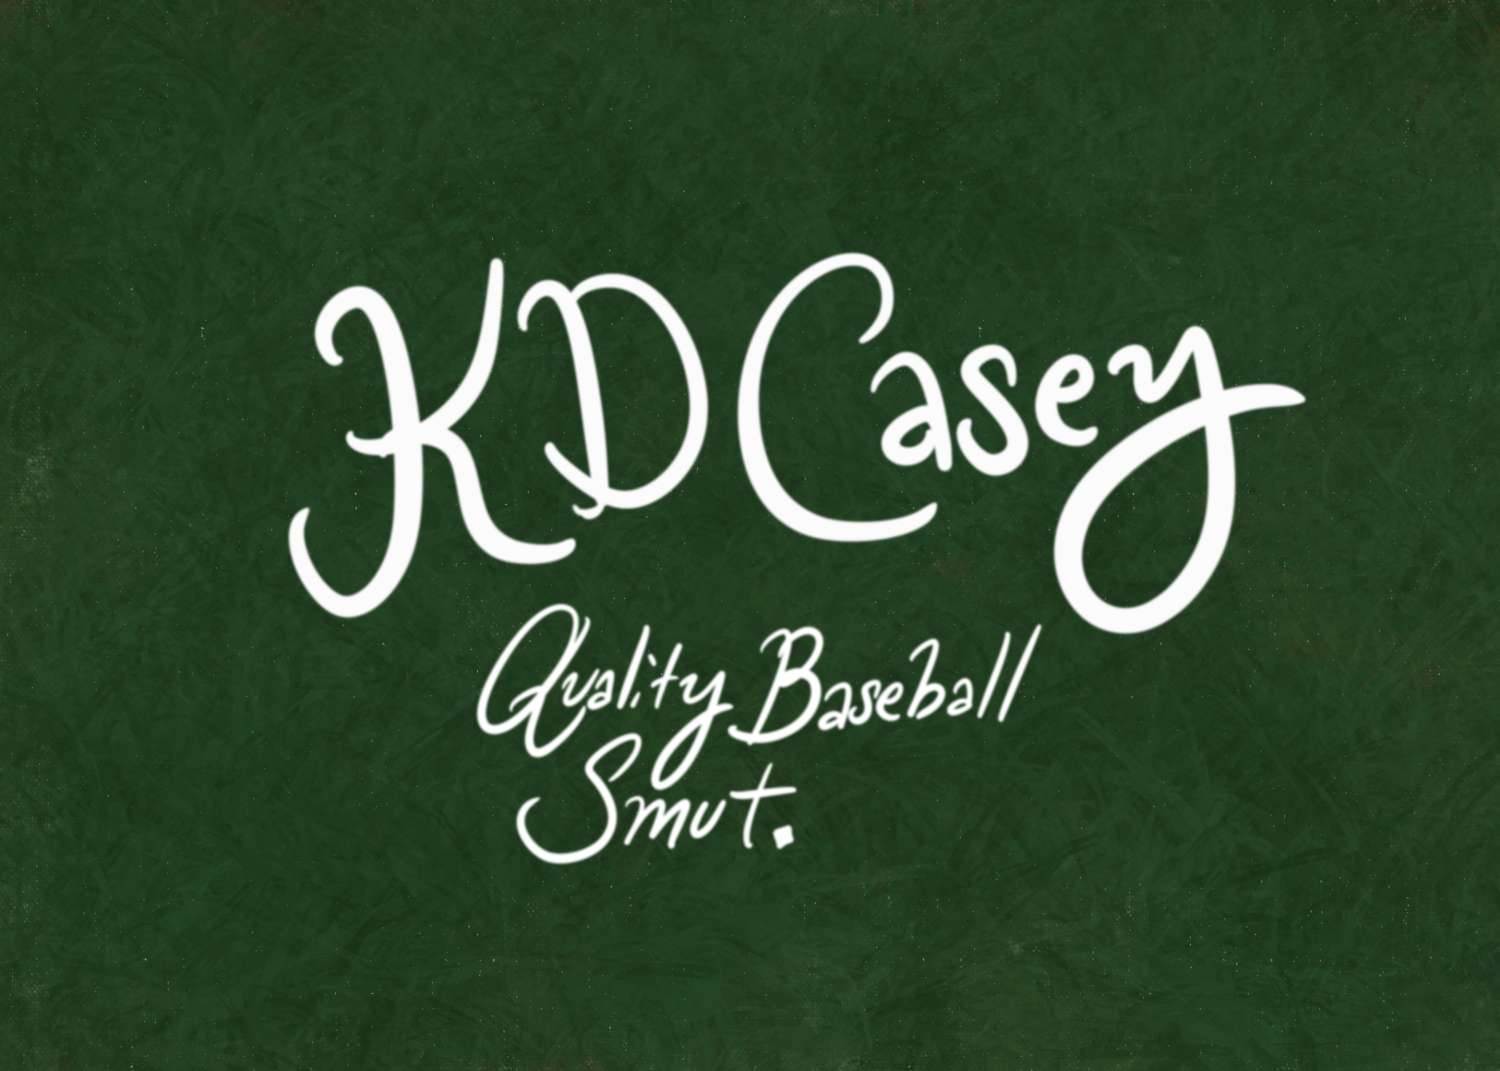 KD Casey Writes